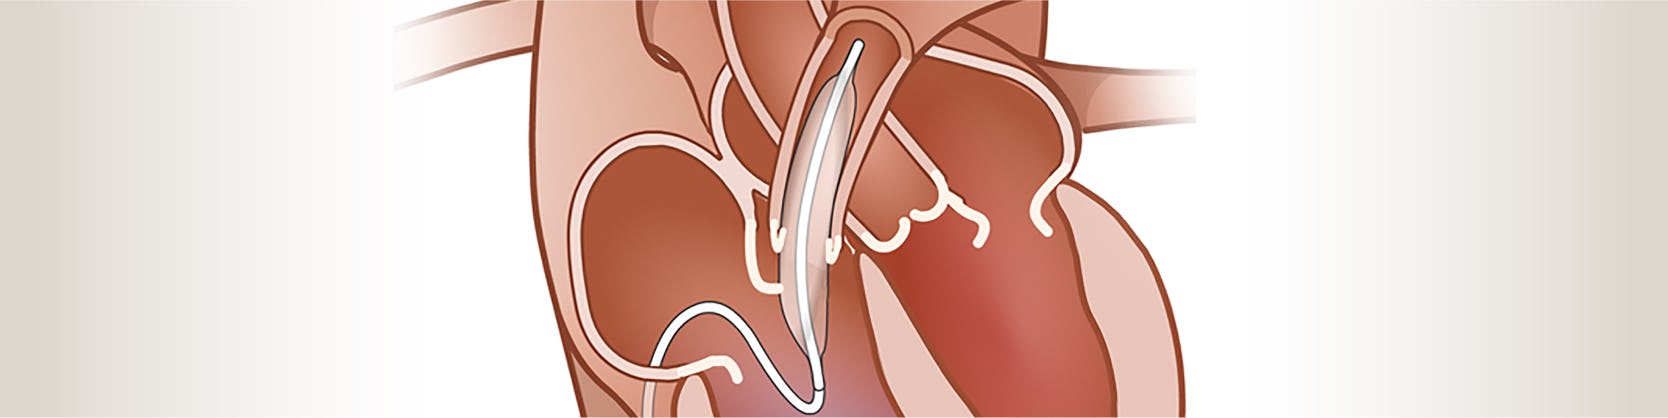 Valvuloplastia pulmonara cu balon | MONZA ARES | Angiologie pediatrica